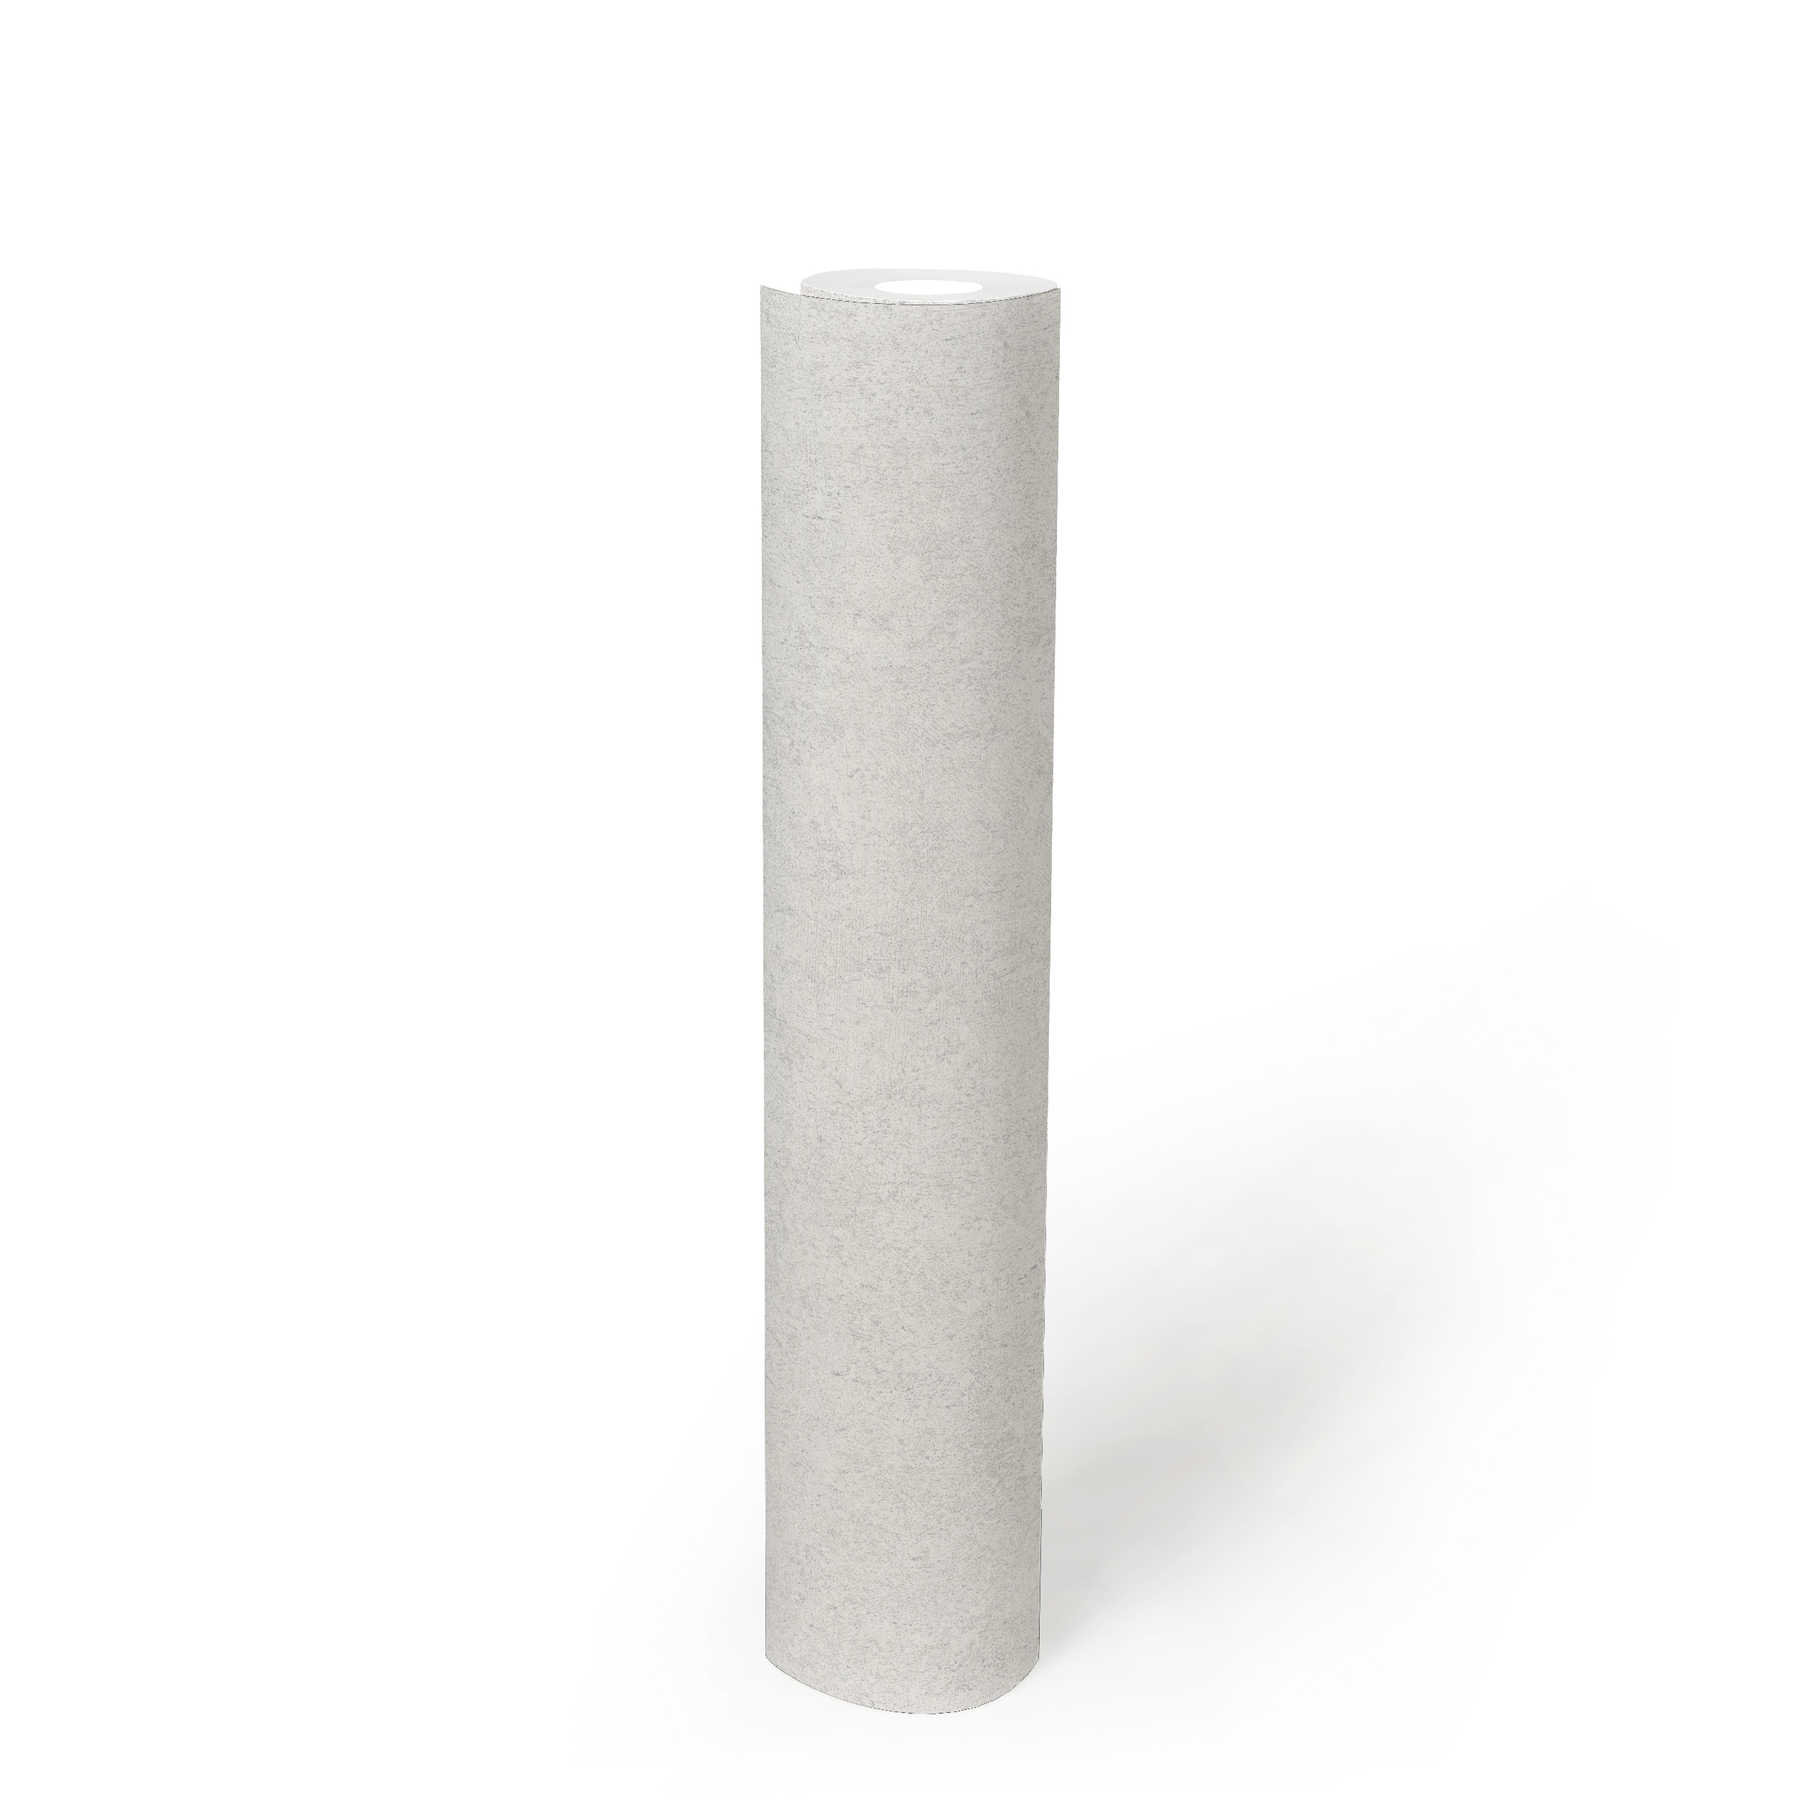             Papel pintado blanco gris con estructura de aspecto de piedra natural
        